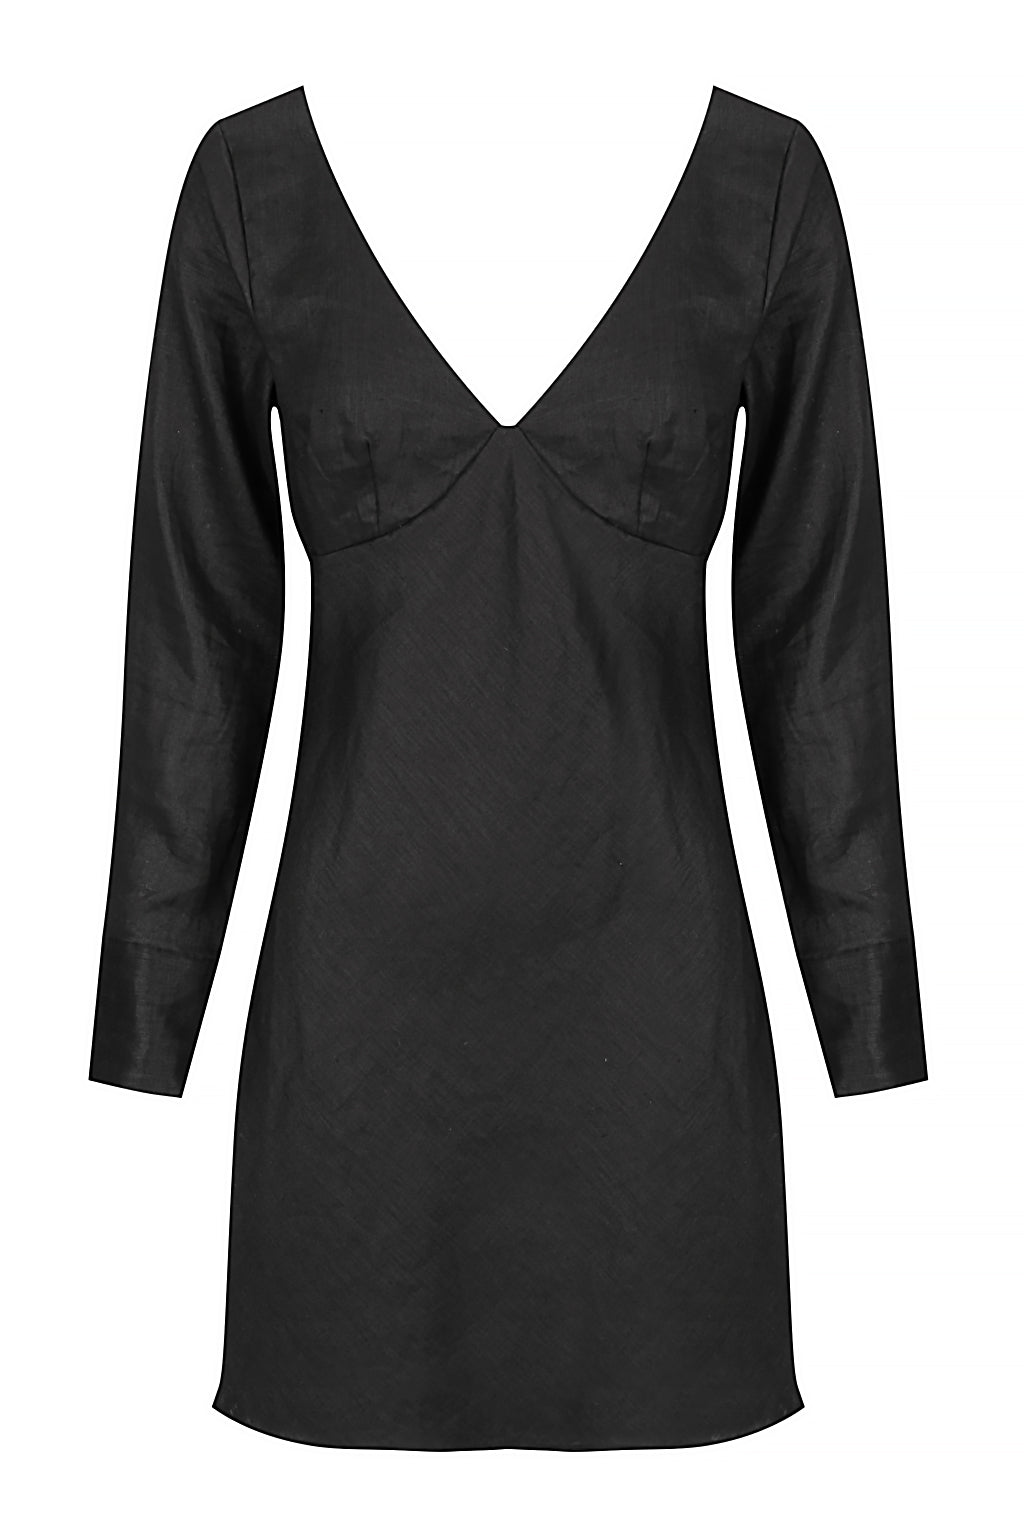 Ivy Black Linen Dress